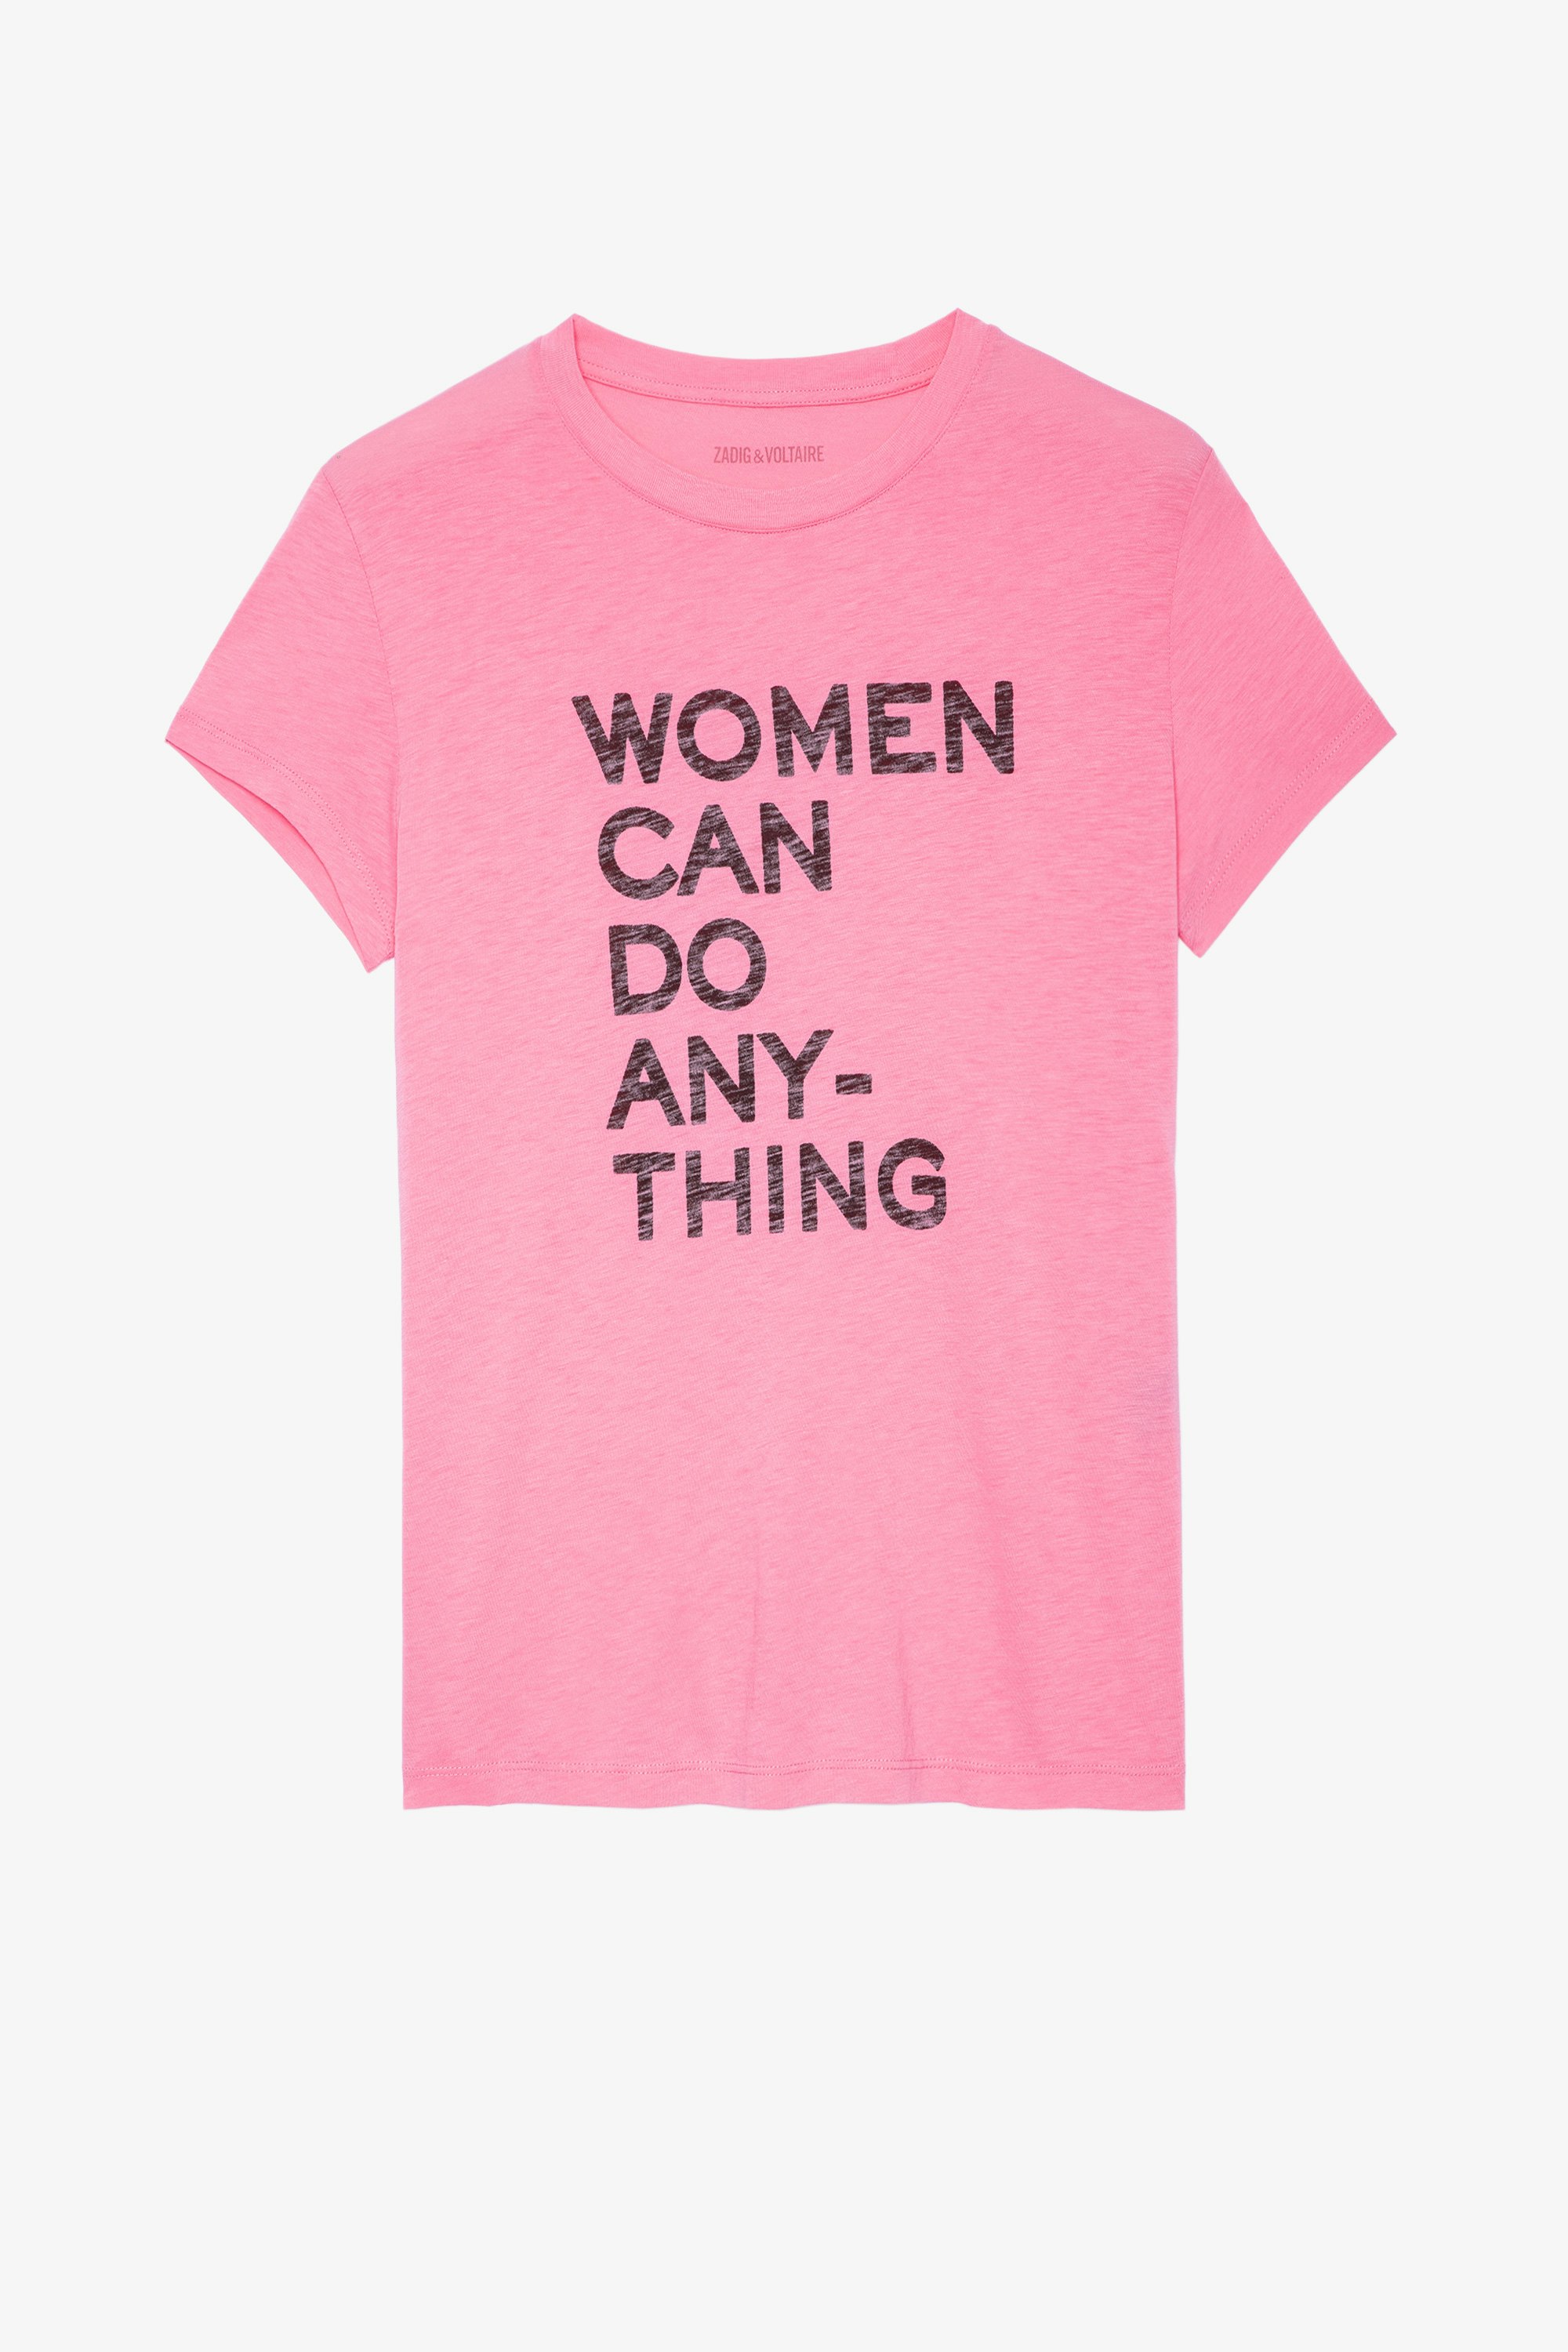 T-Shirt Walk Women Can Do Anything T-shirt en coton rose Women can do anything Femme